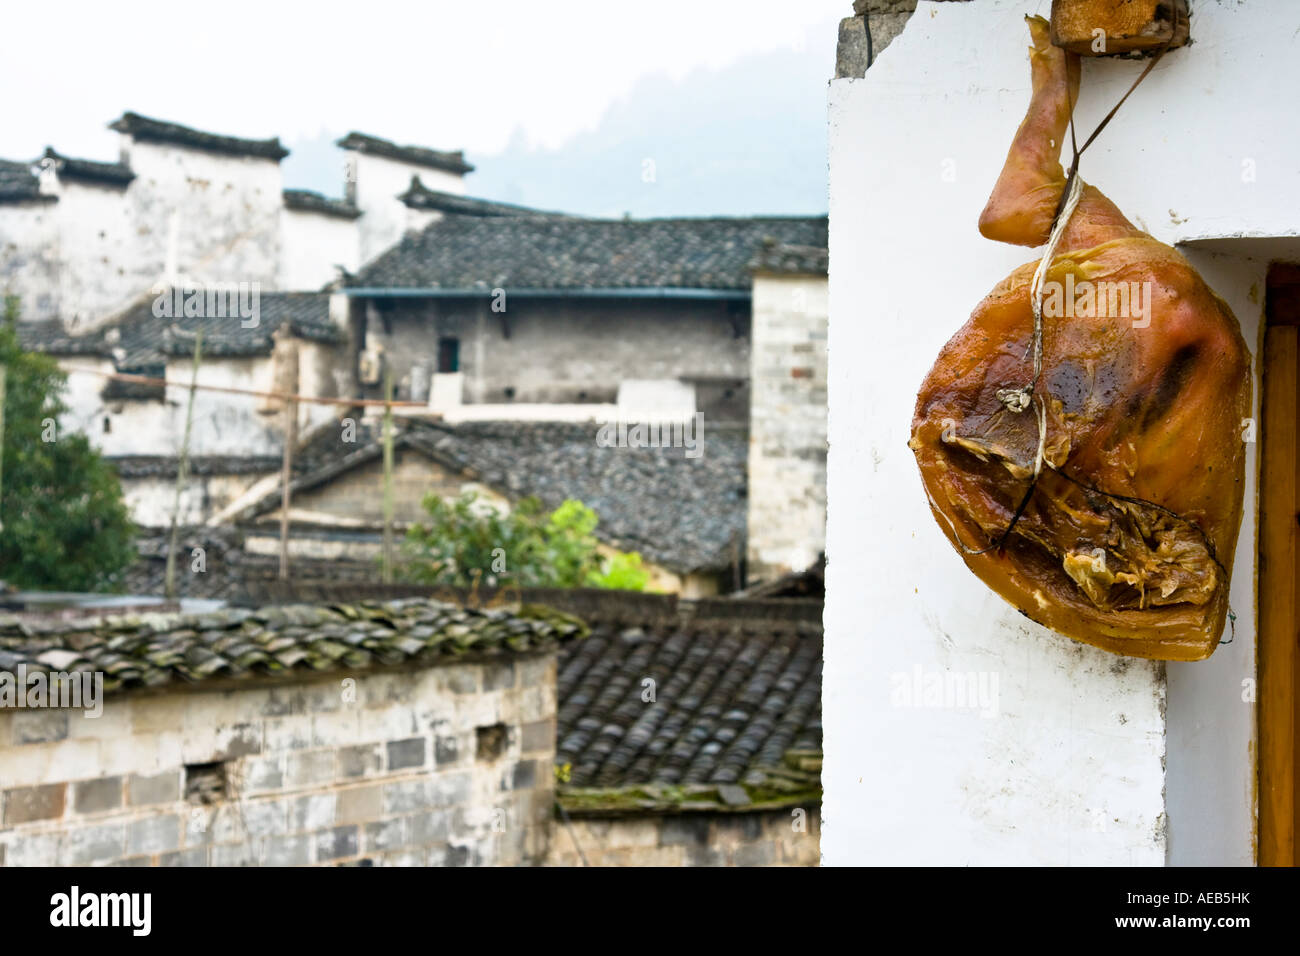 Pork Hind Quarter Drying Ancient Huizhou Style Chinese Village Xidi China Anhui Province Stock Photo